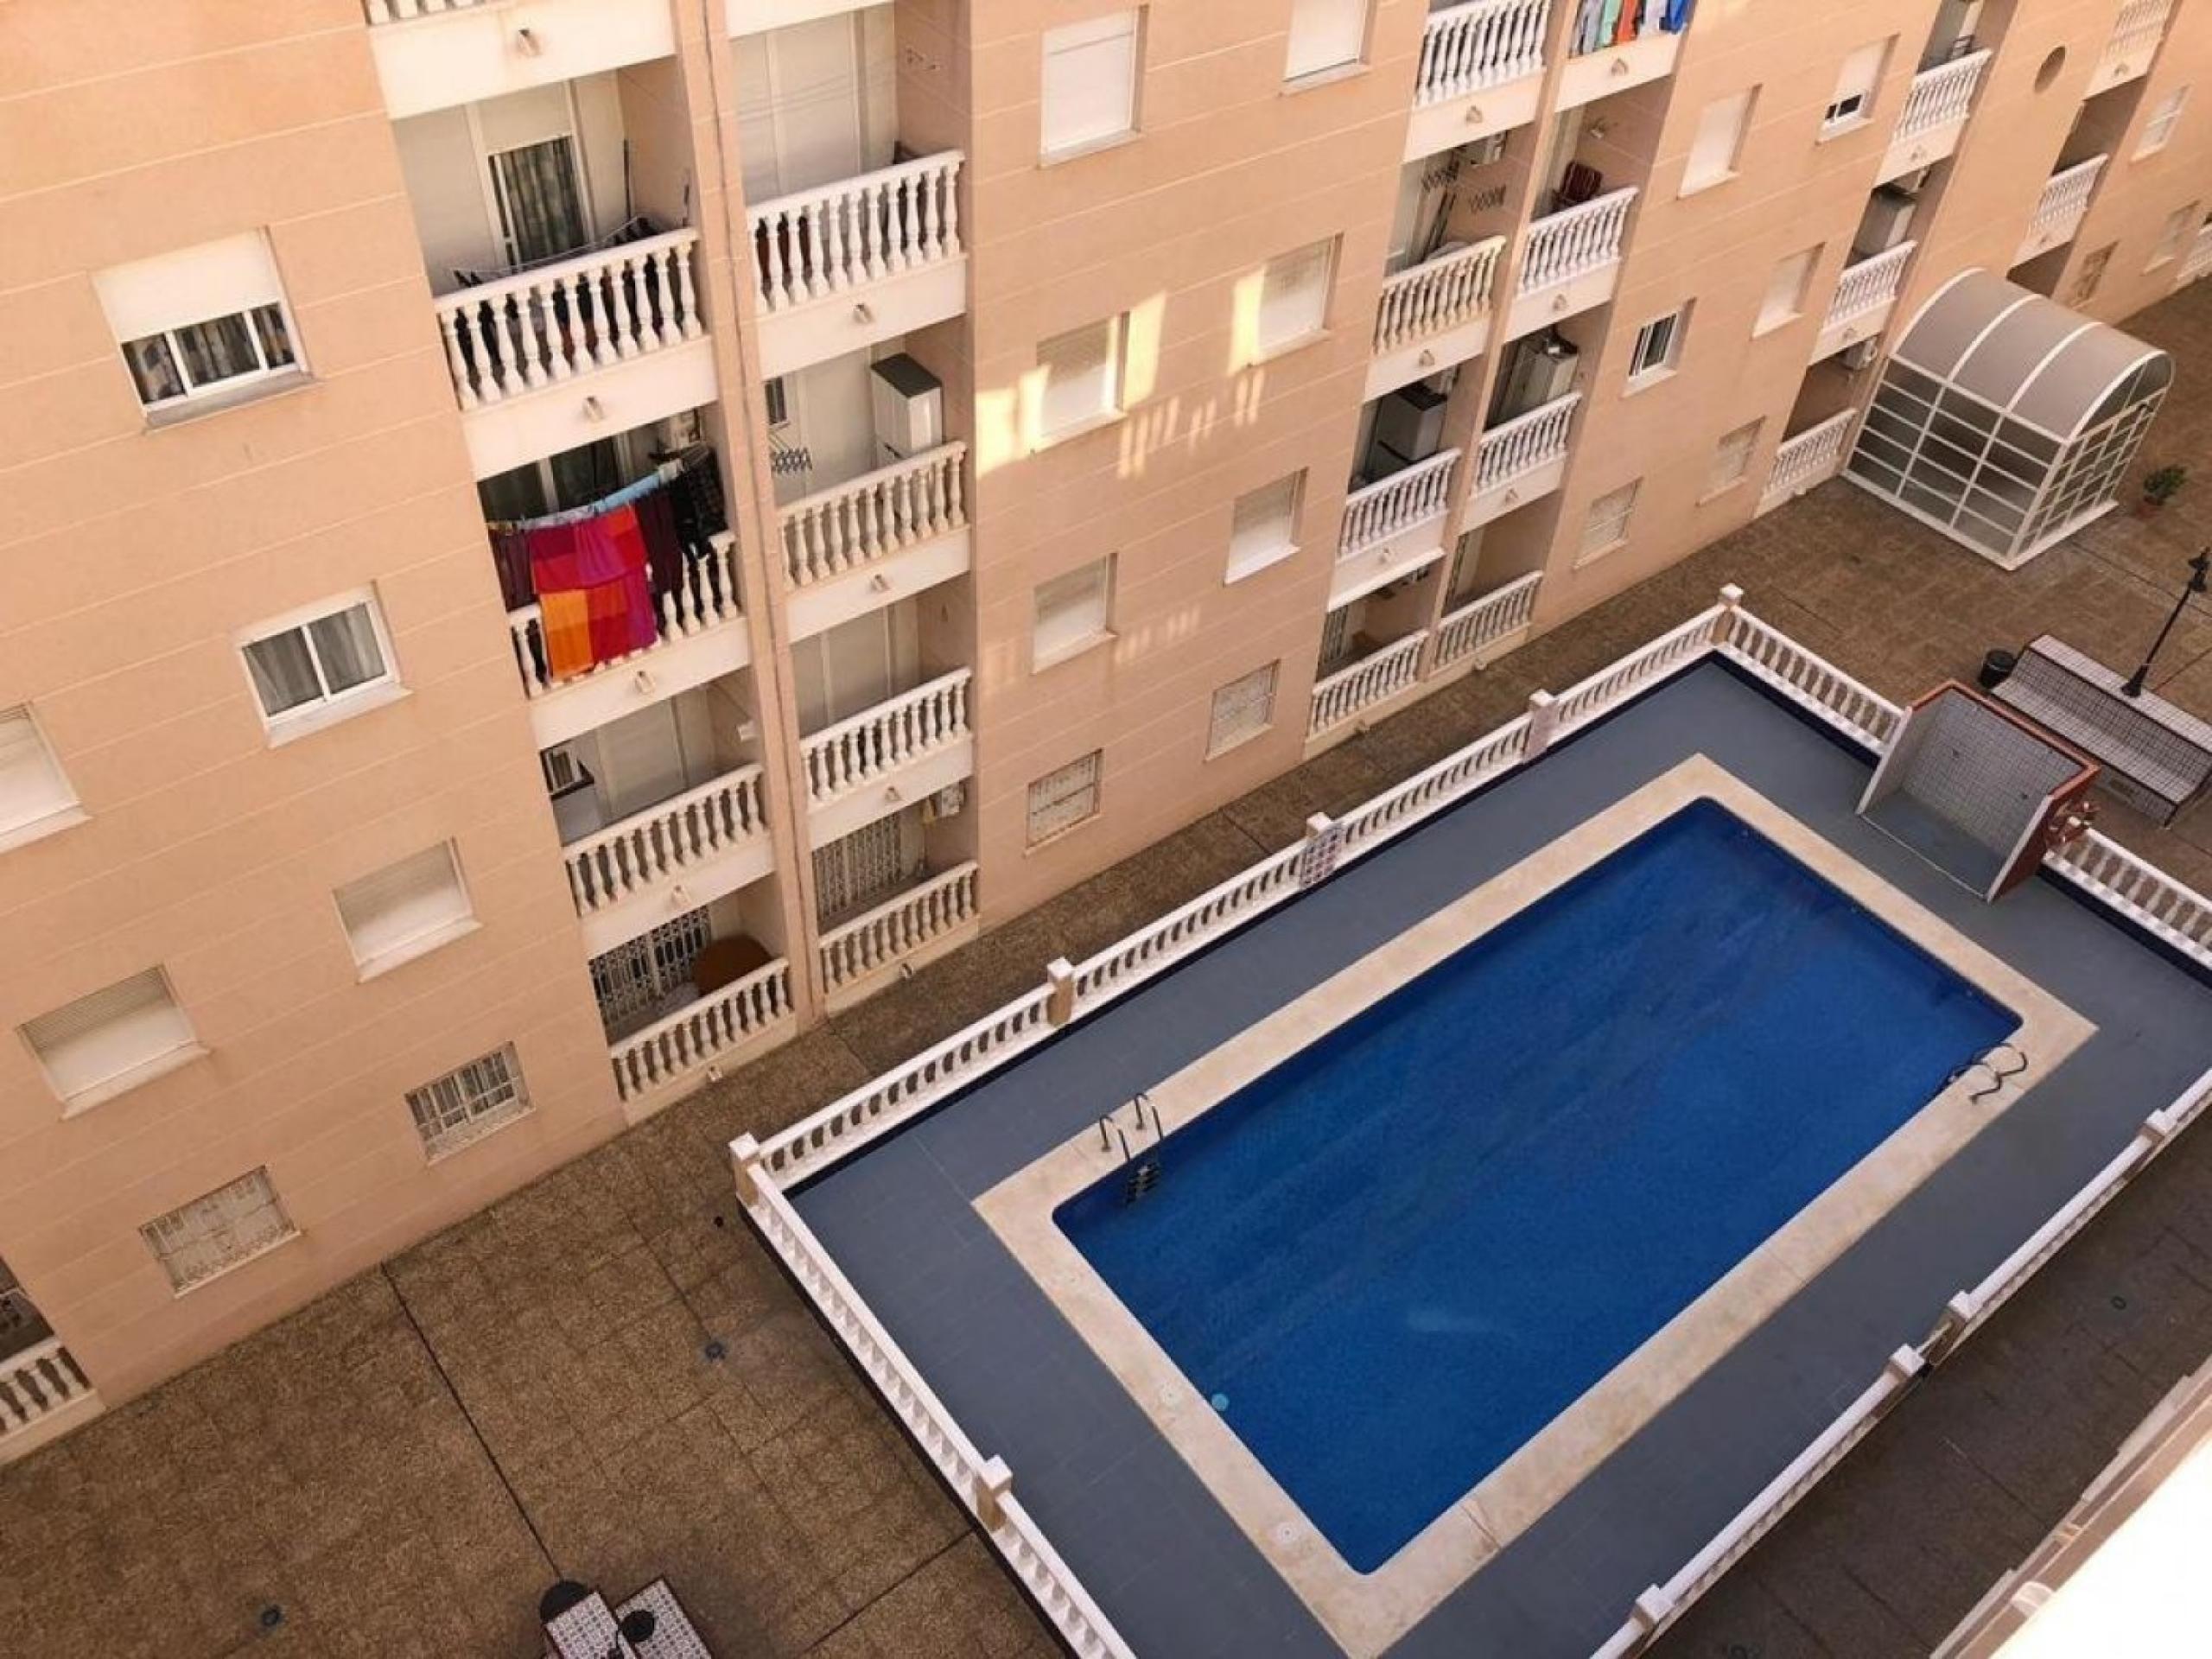 Appartement de 2 chambres avec garage, rangement et piscine commune.